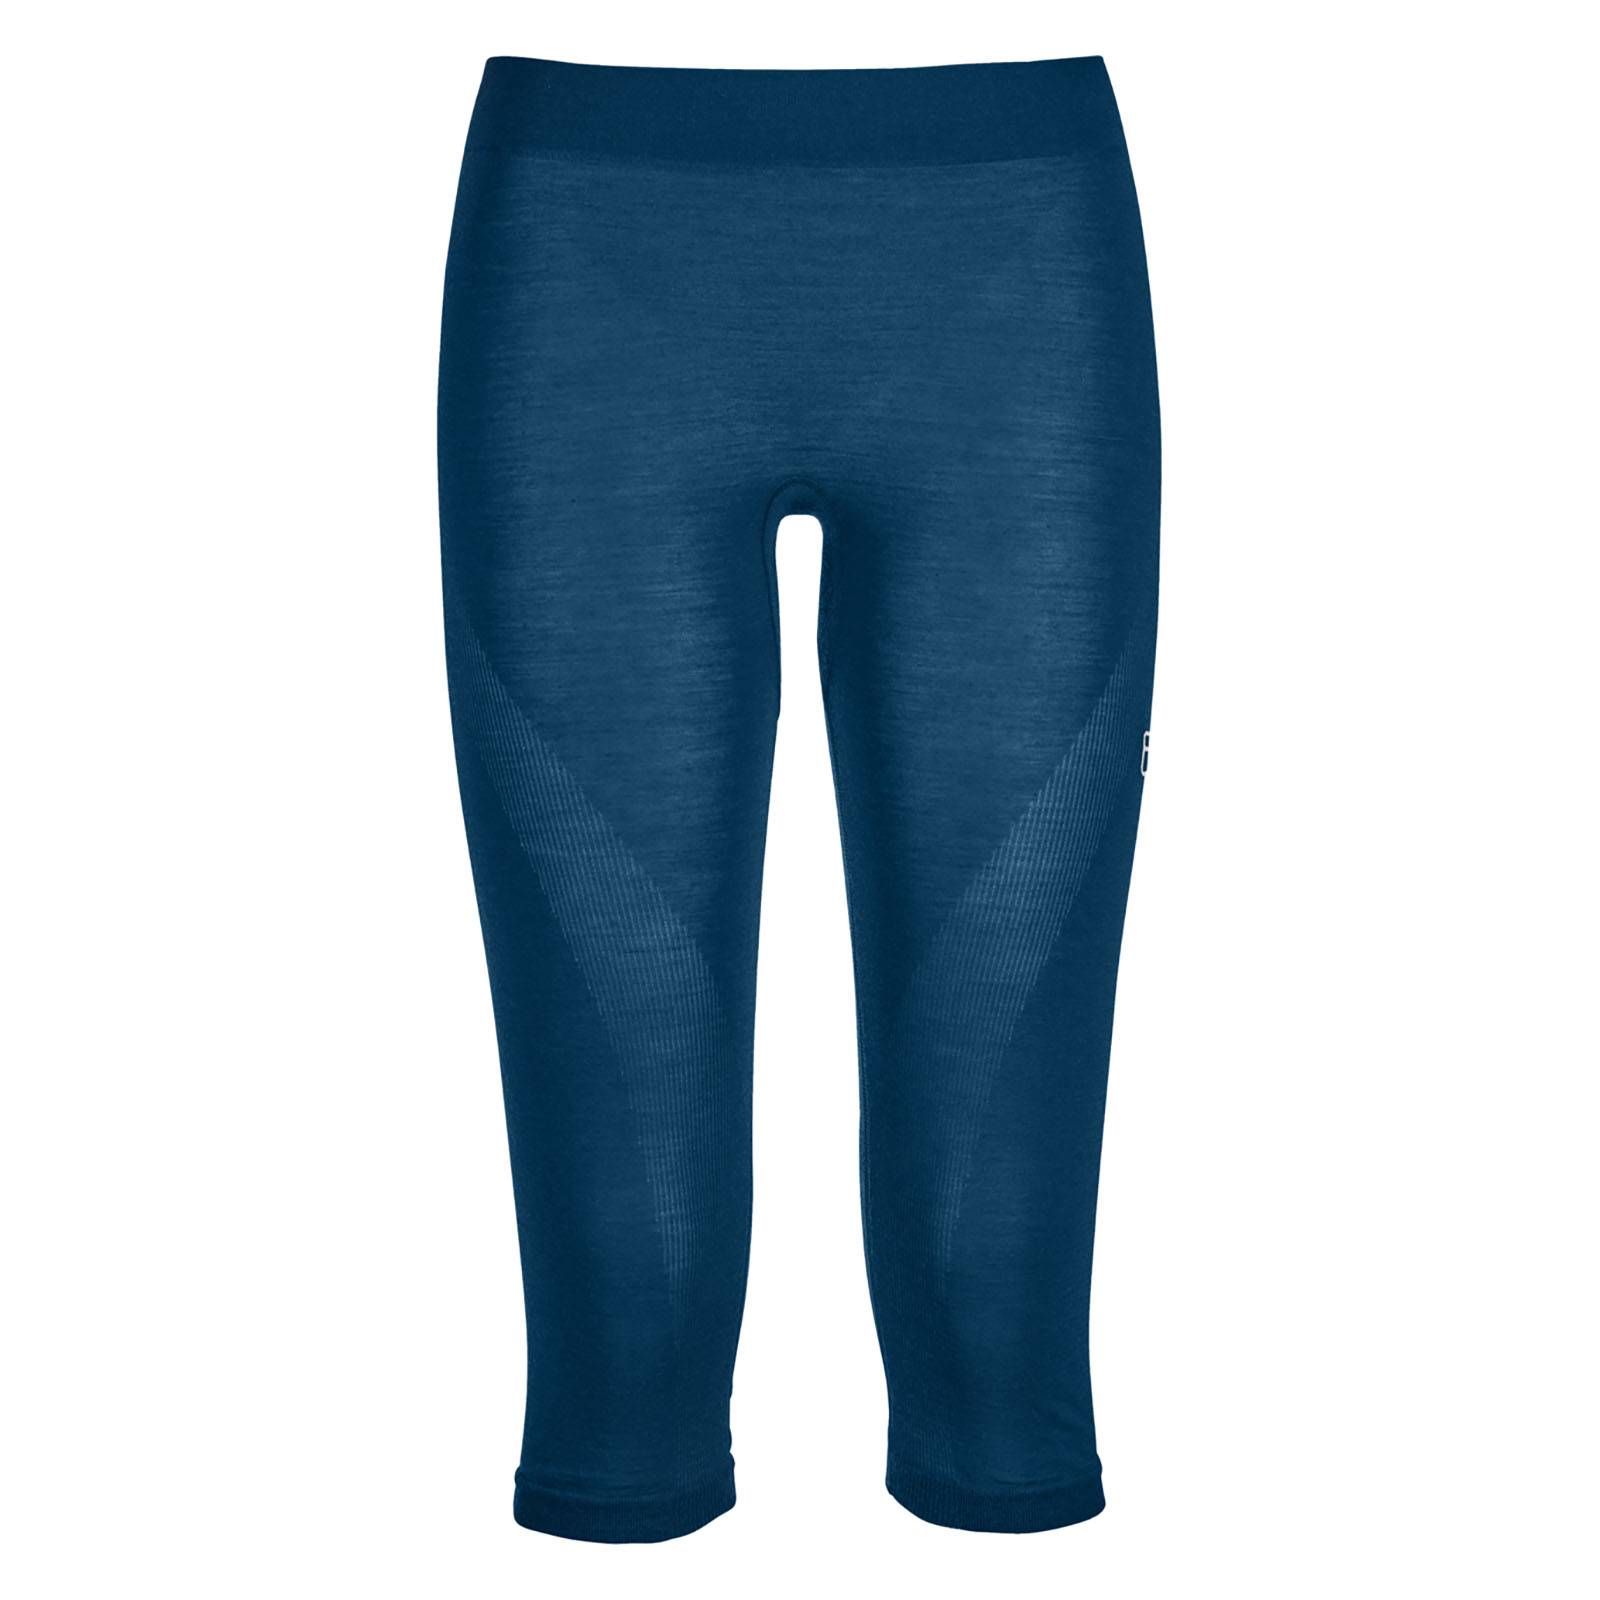 Ortovox 120 Comp Light Short Pants Damen  3/4 Unterhosen petrol blue